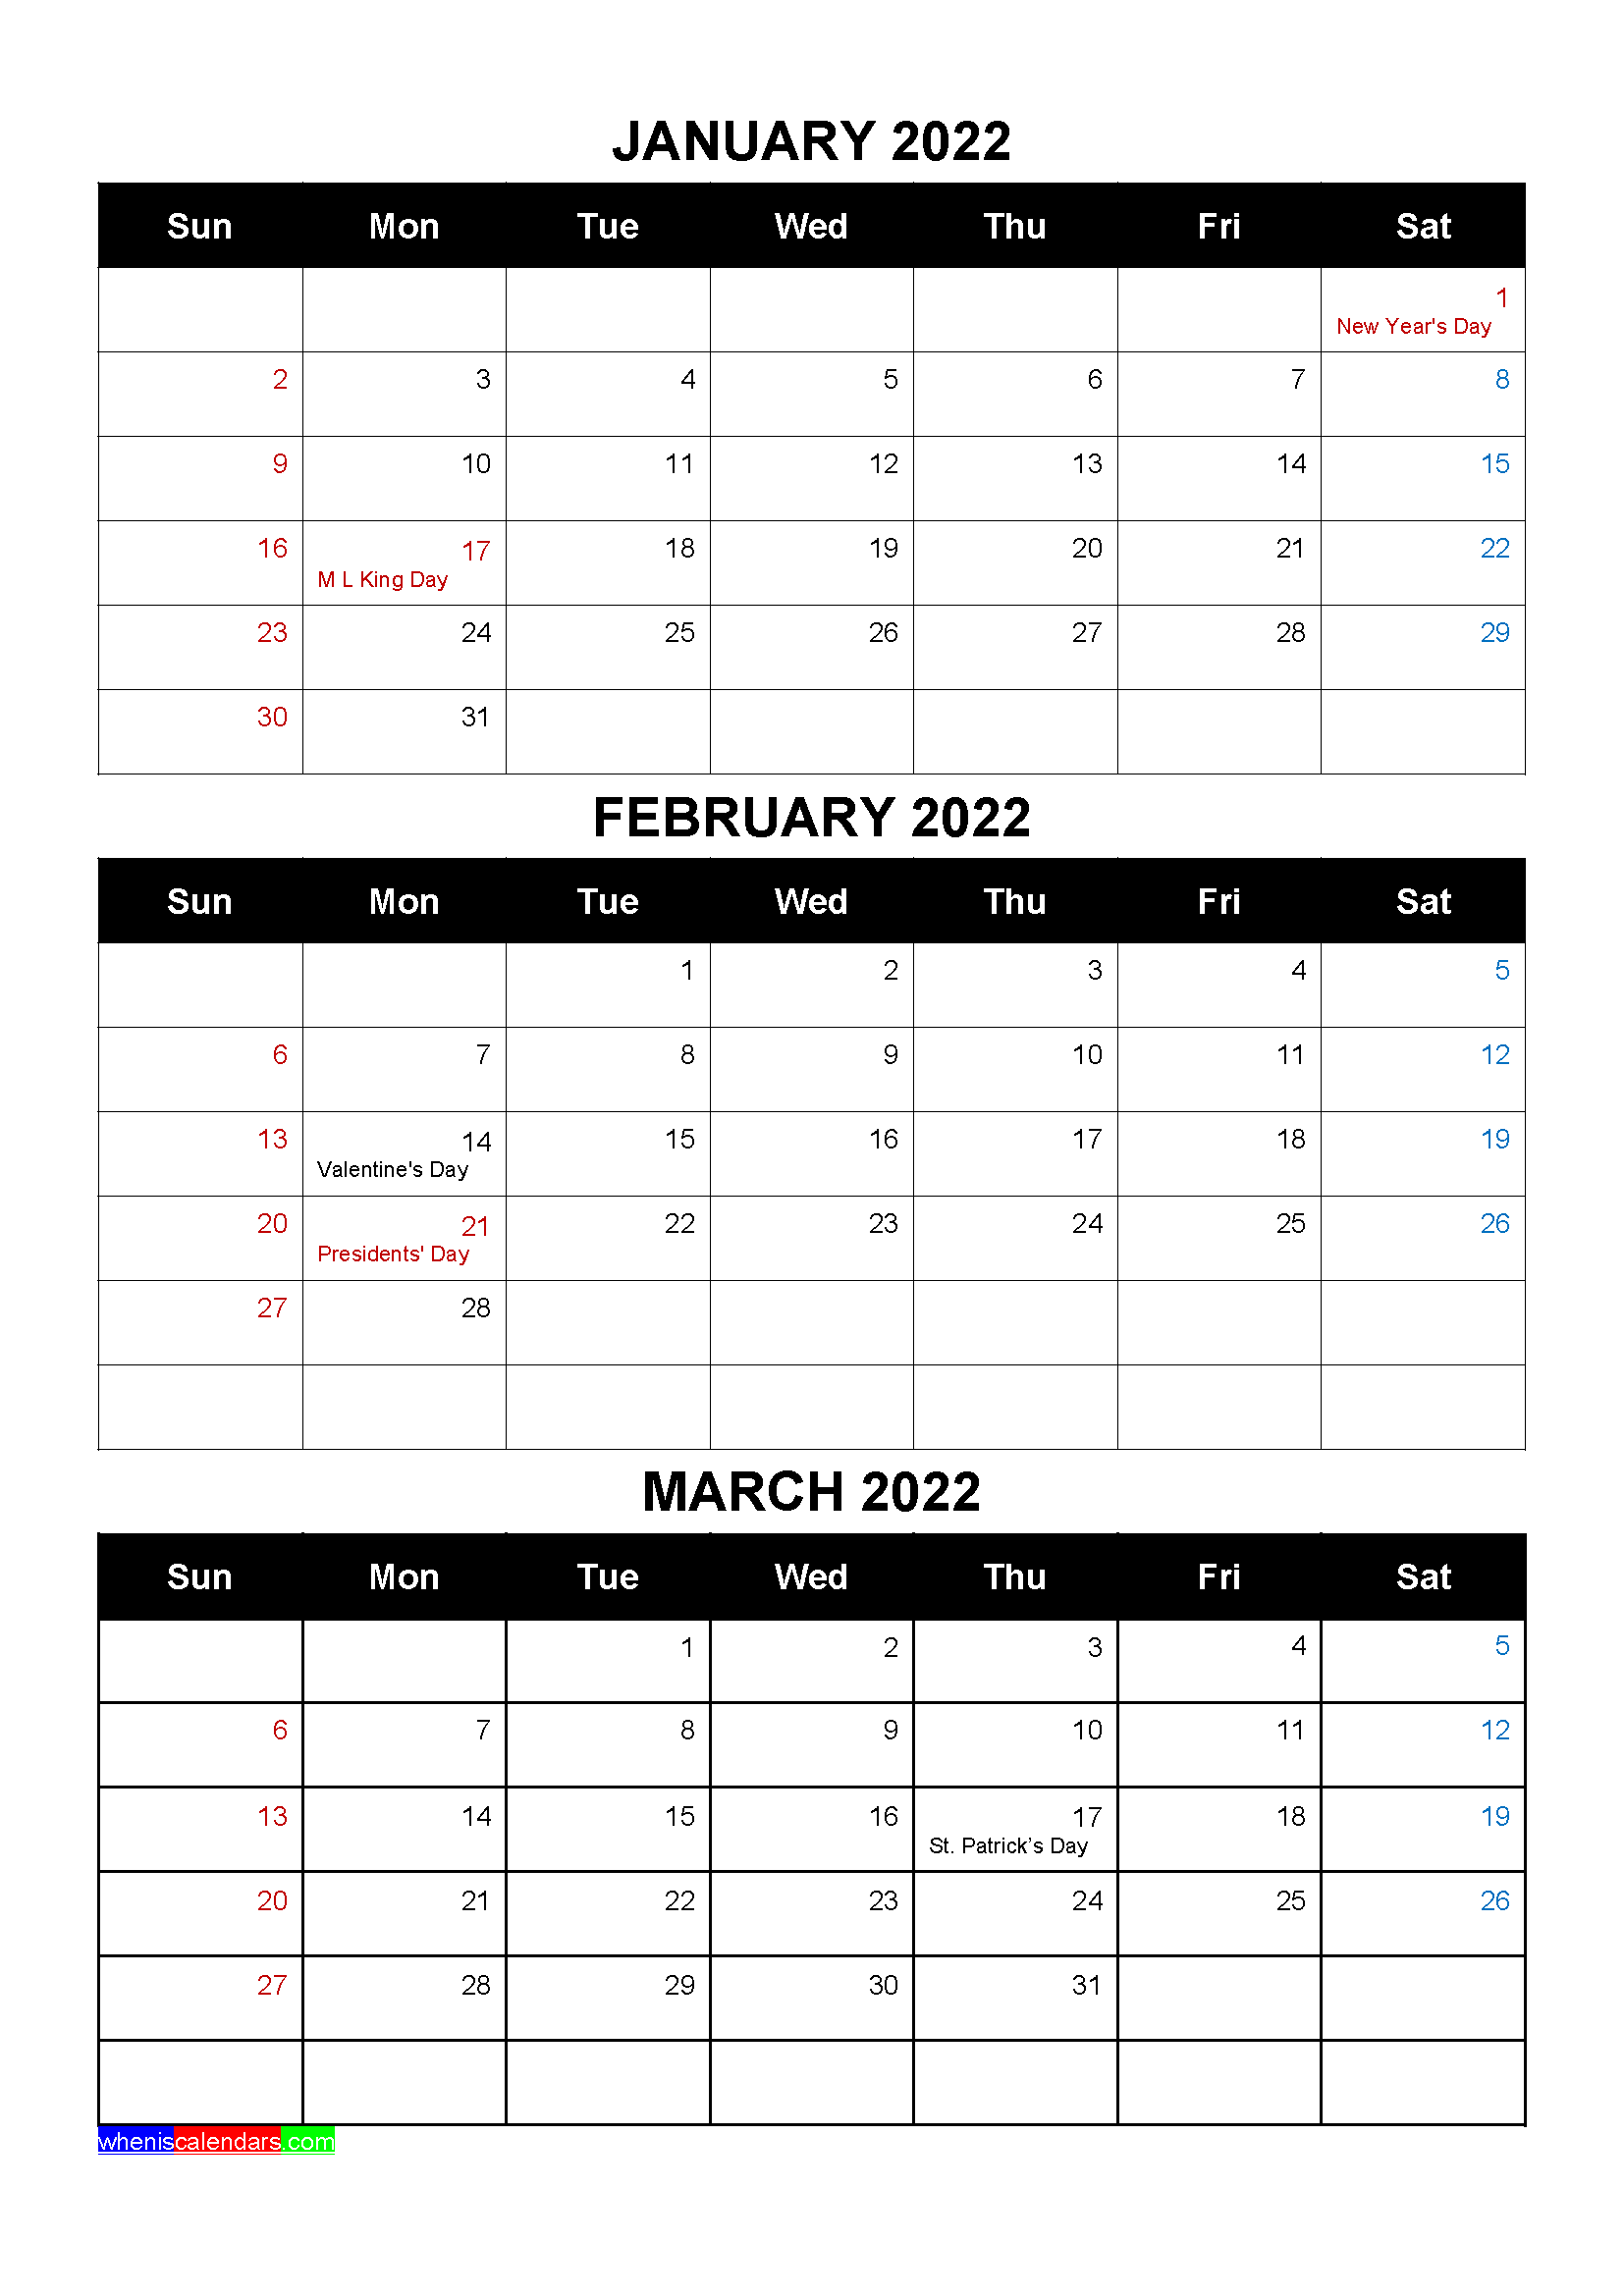 free-calendar-january-february-march-2022-with-holidays-four-quarters